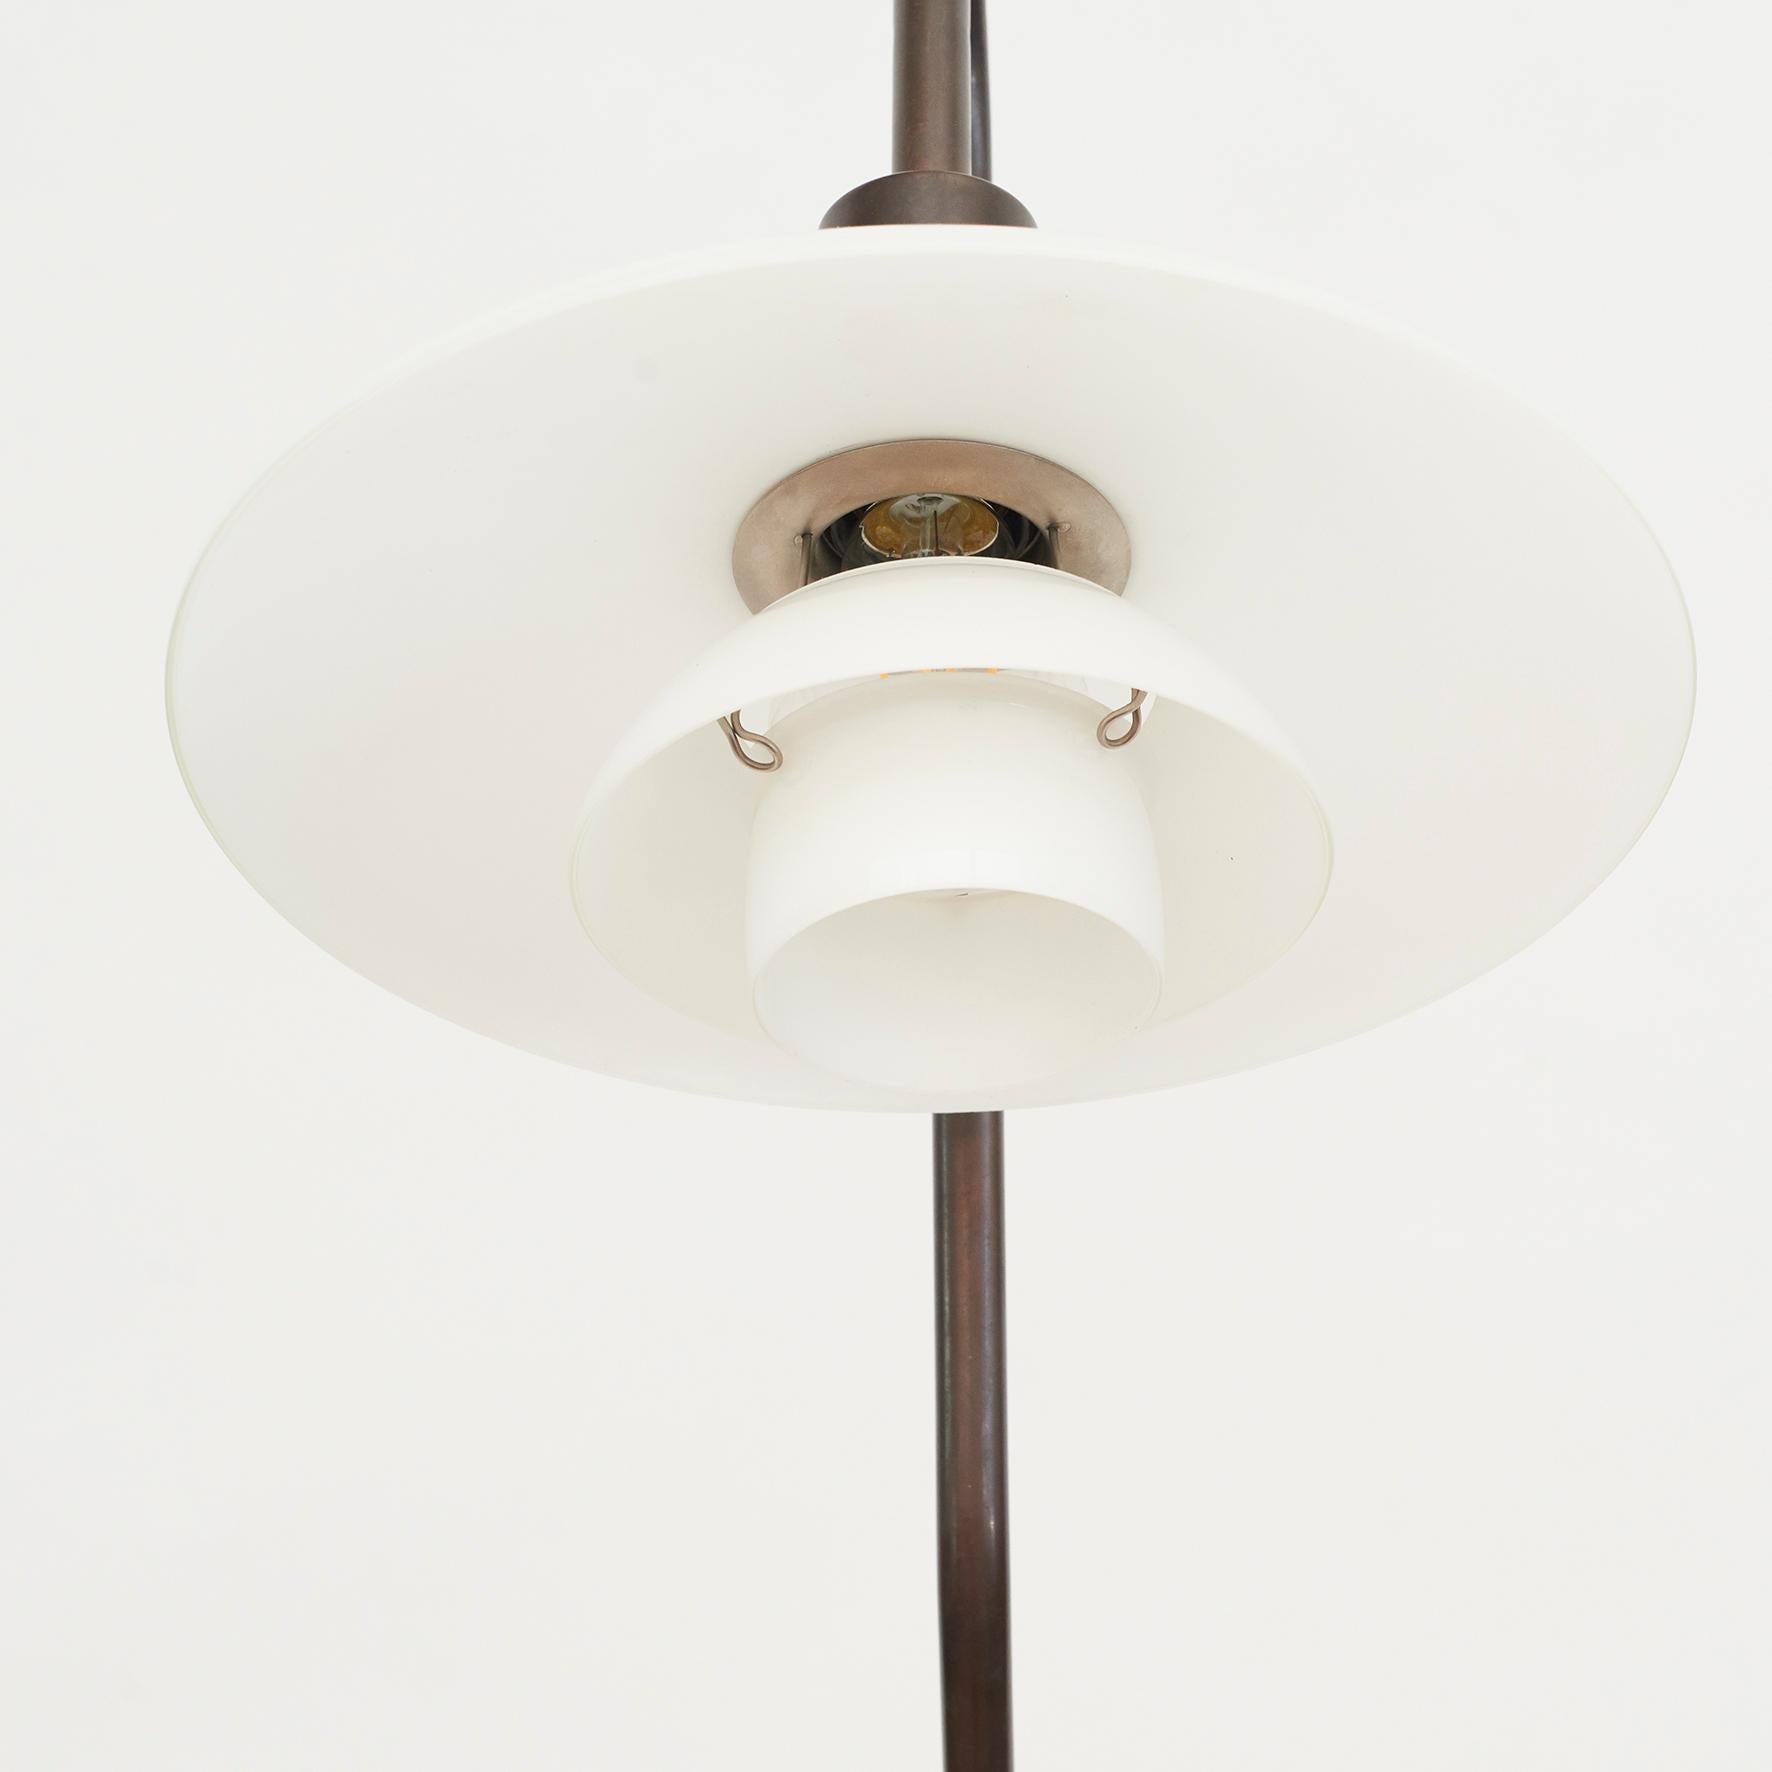 Danish Poul Henningsen 'Snowdrop' PH 3/2 Standard Floor Lamp, circa 1950